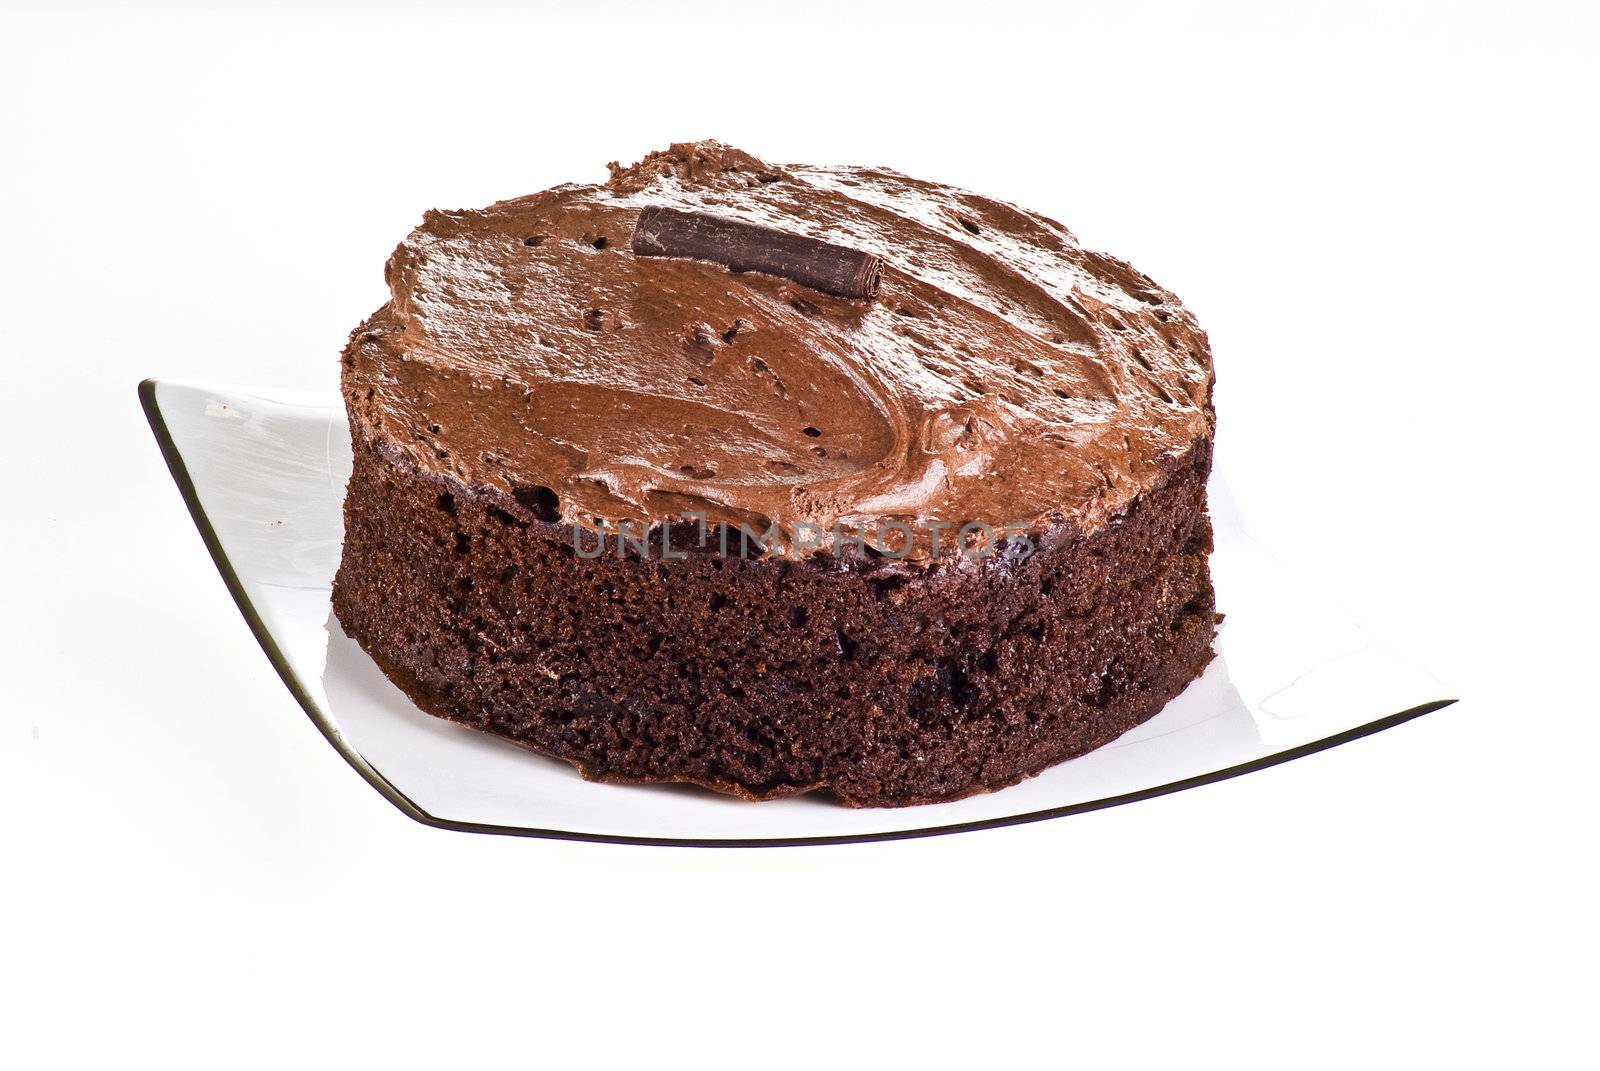 Chocolate cake by caldix